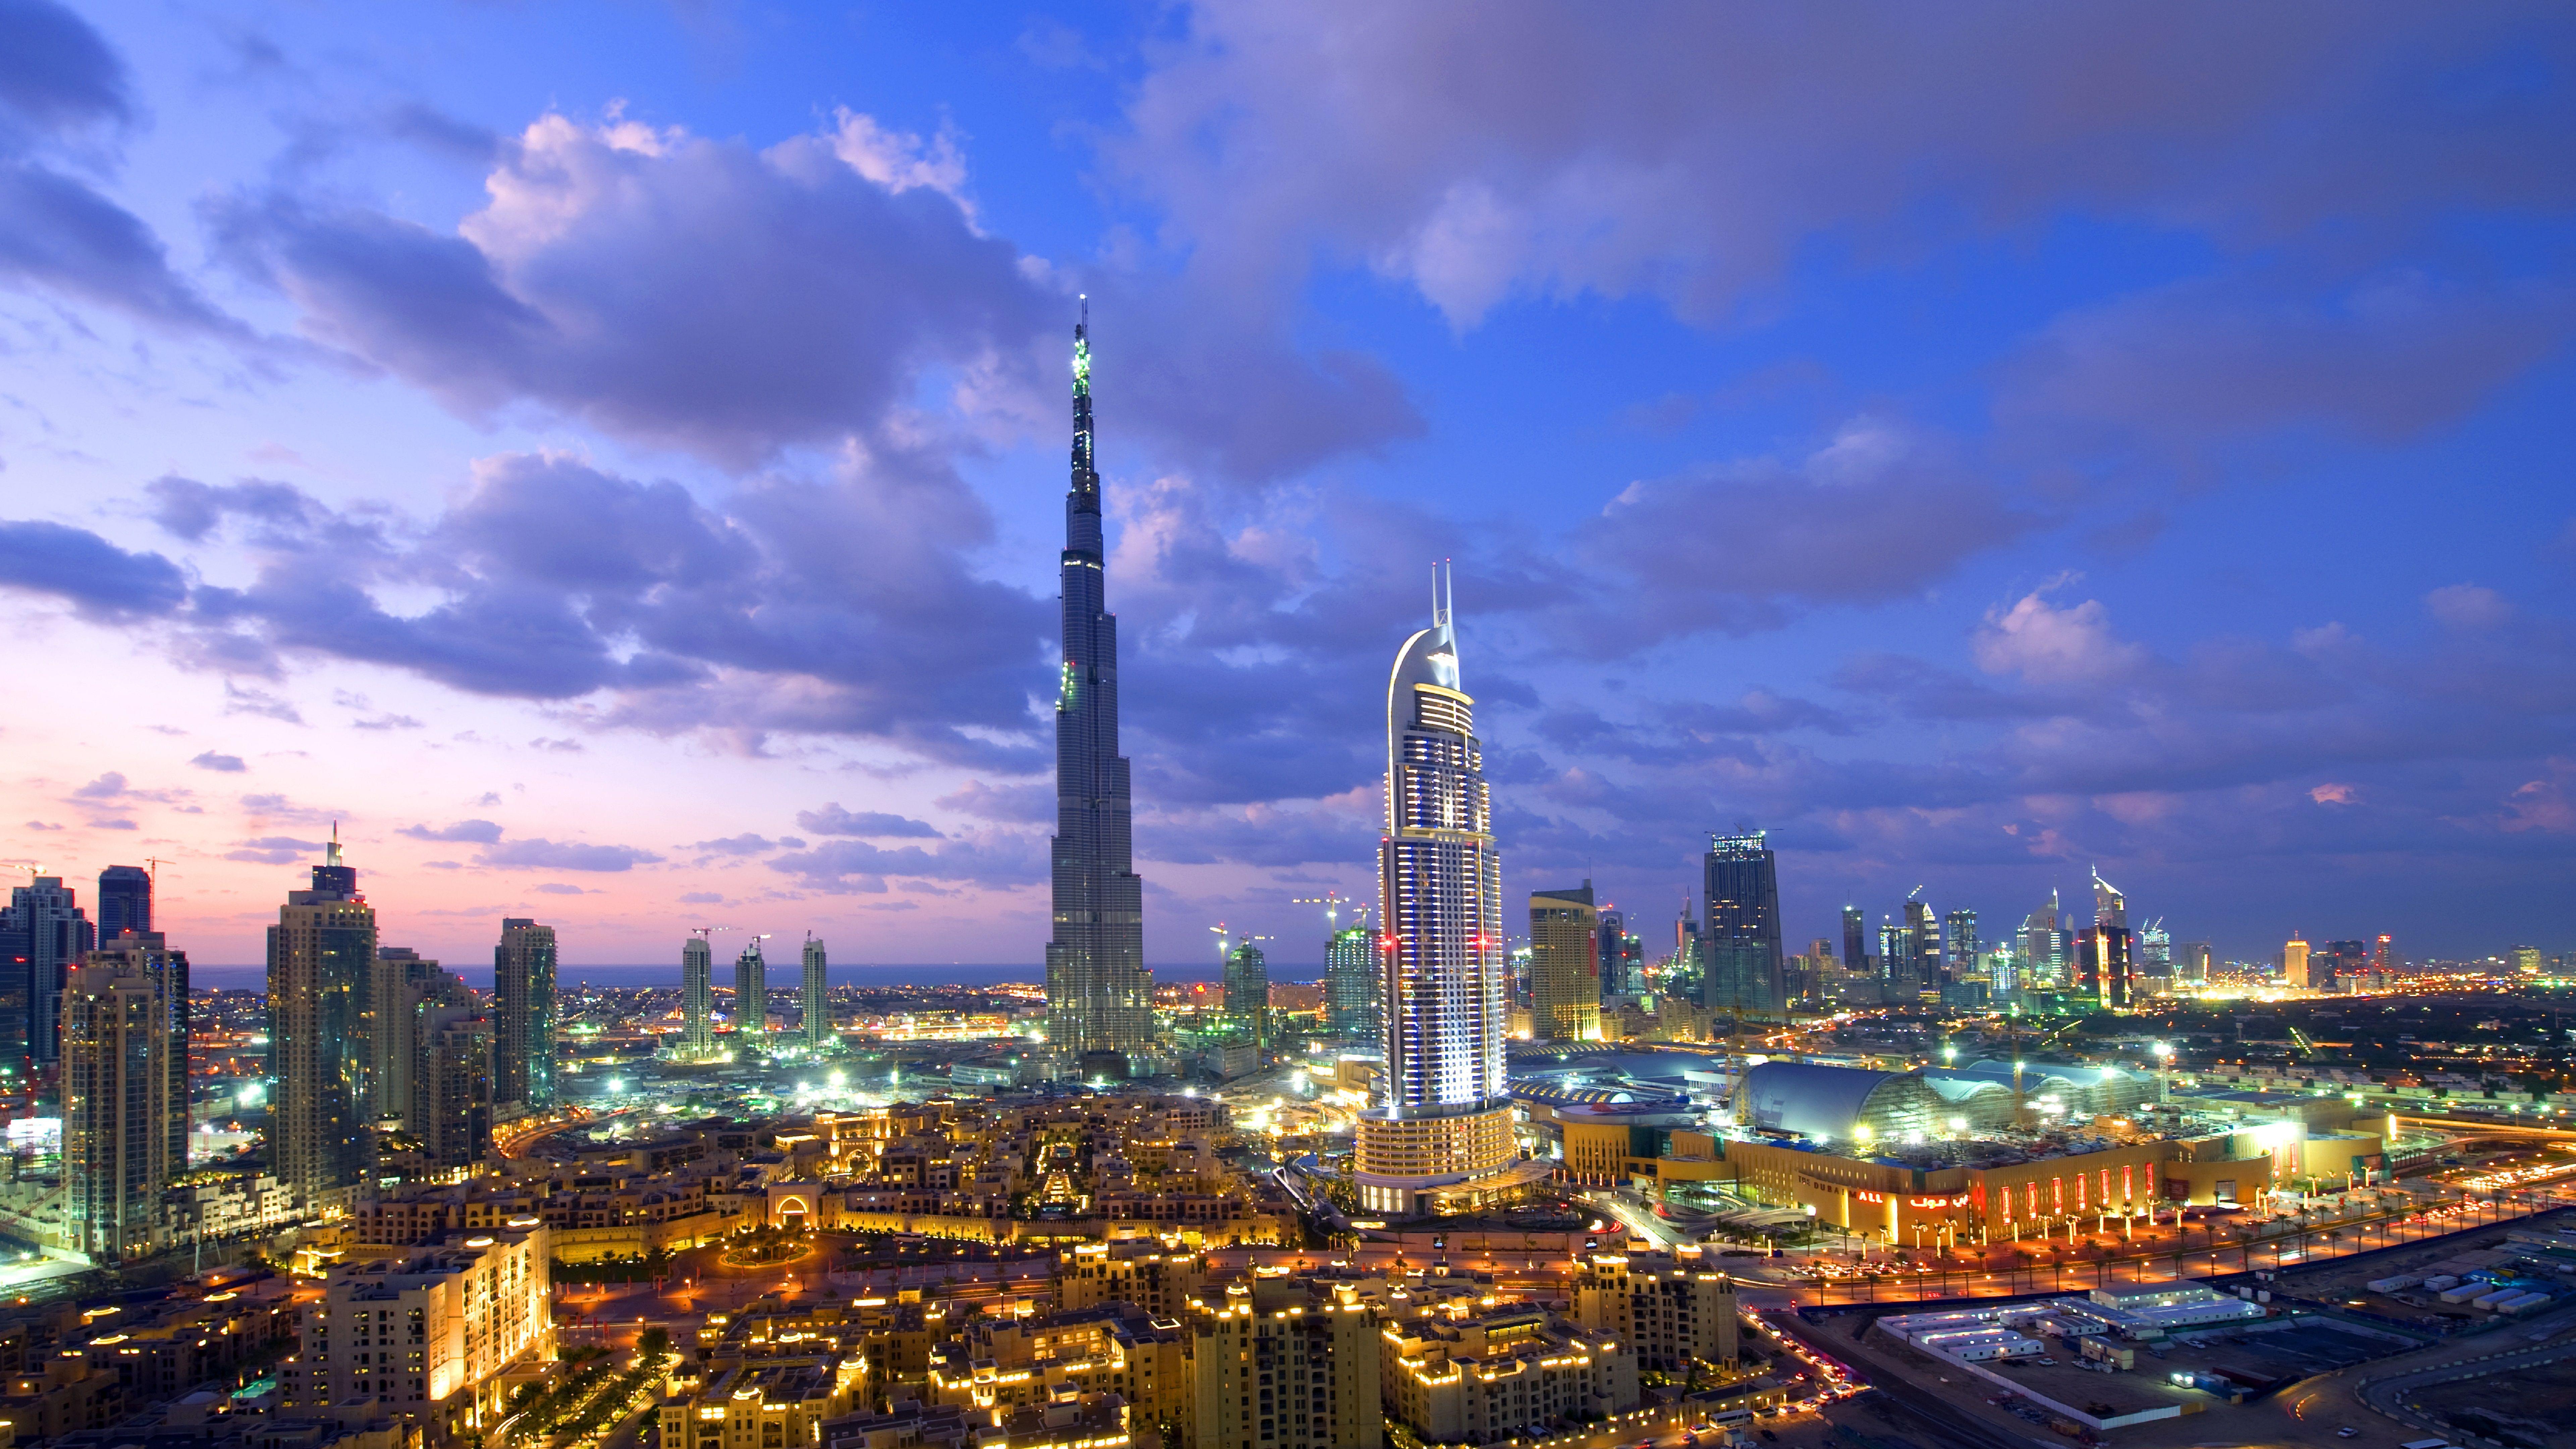 Burj Khalifa Dubai UAE 8K Wallpaper. Burj khalifa in 2019